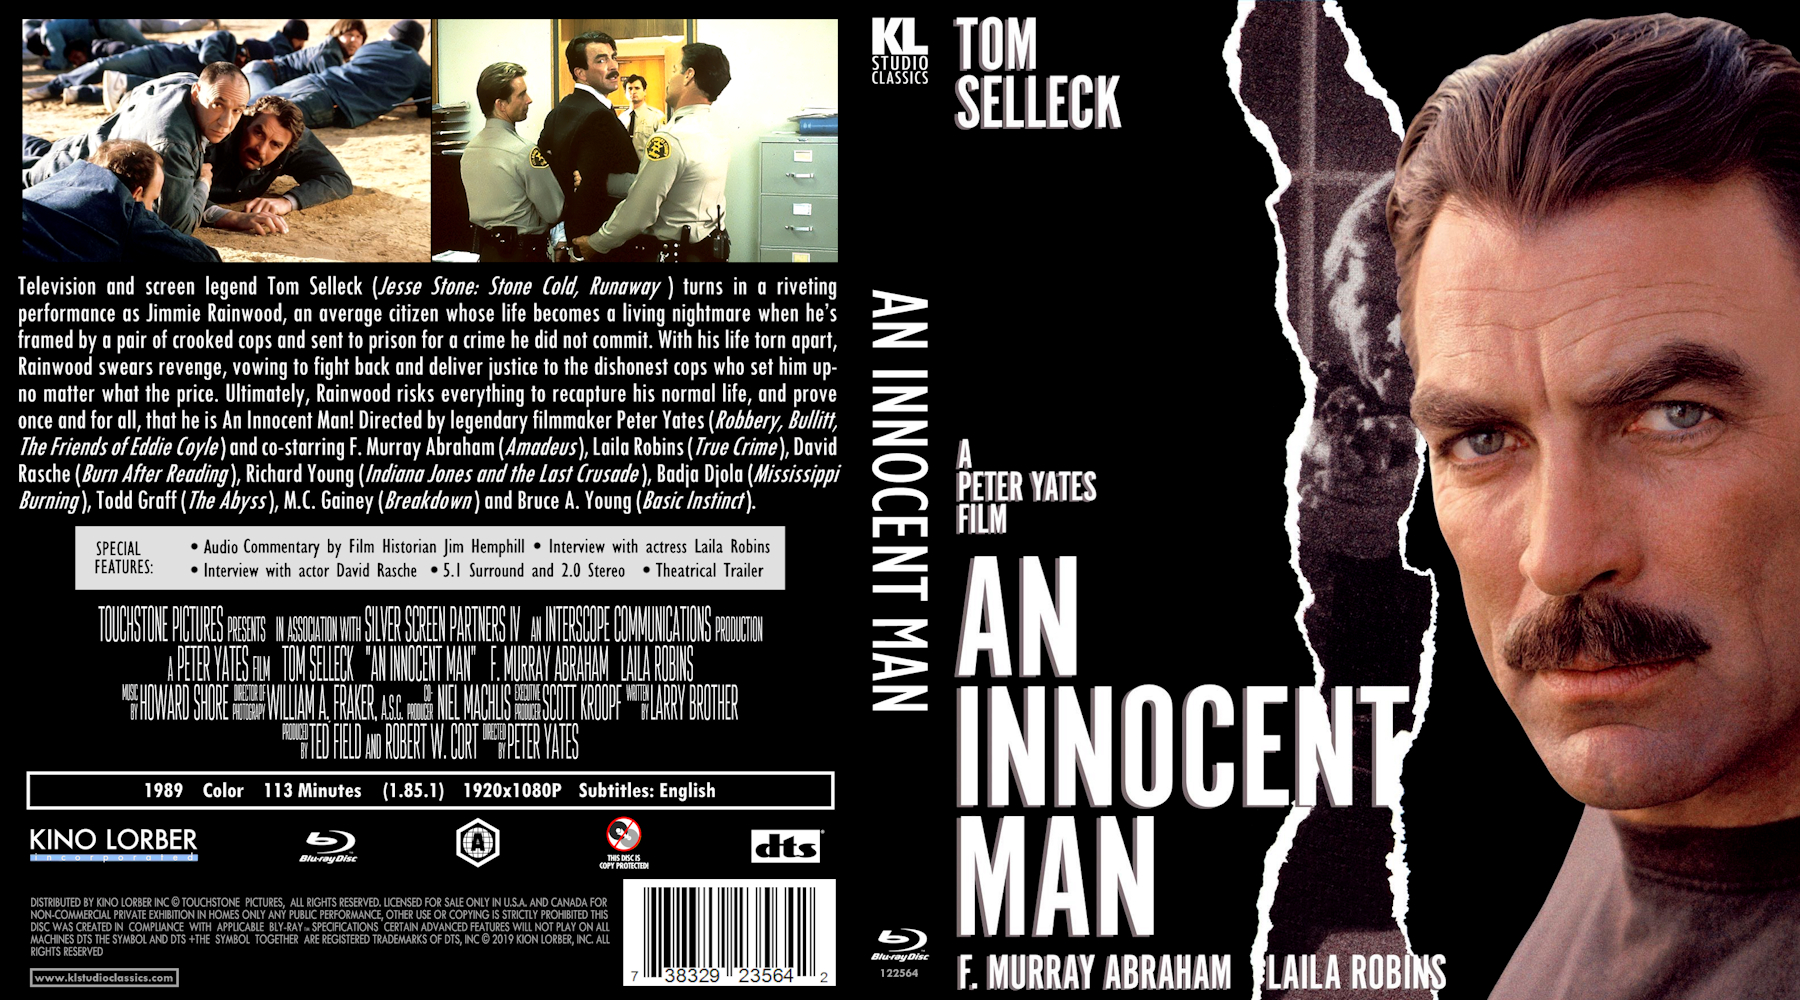 An Innocent Man (1989) Kino Lorber test.jpg